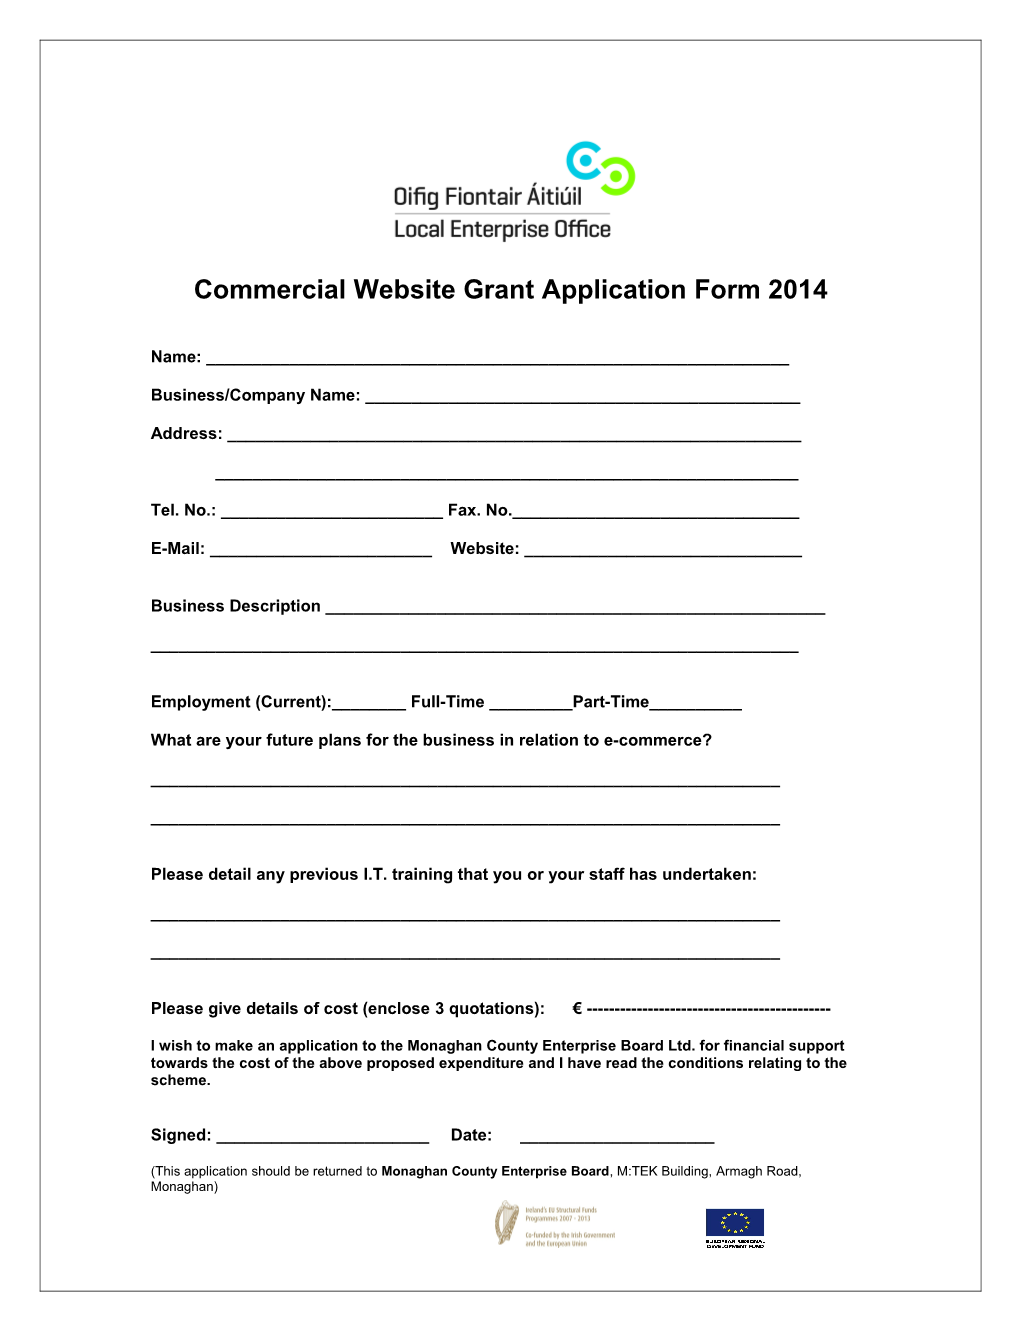 Commercial Website Grant Application Form 2014